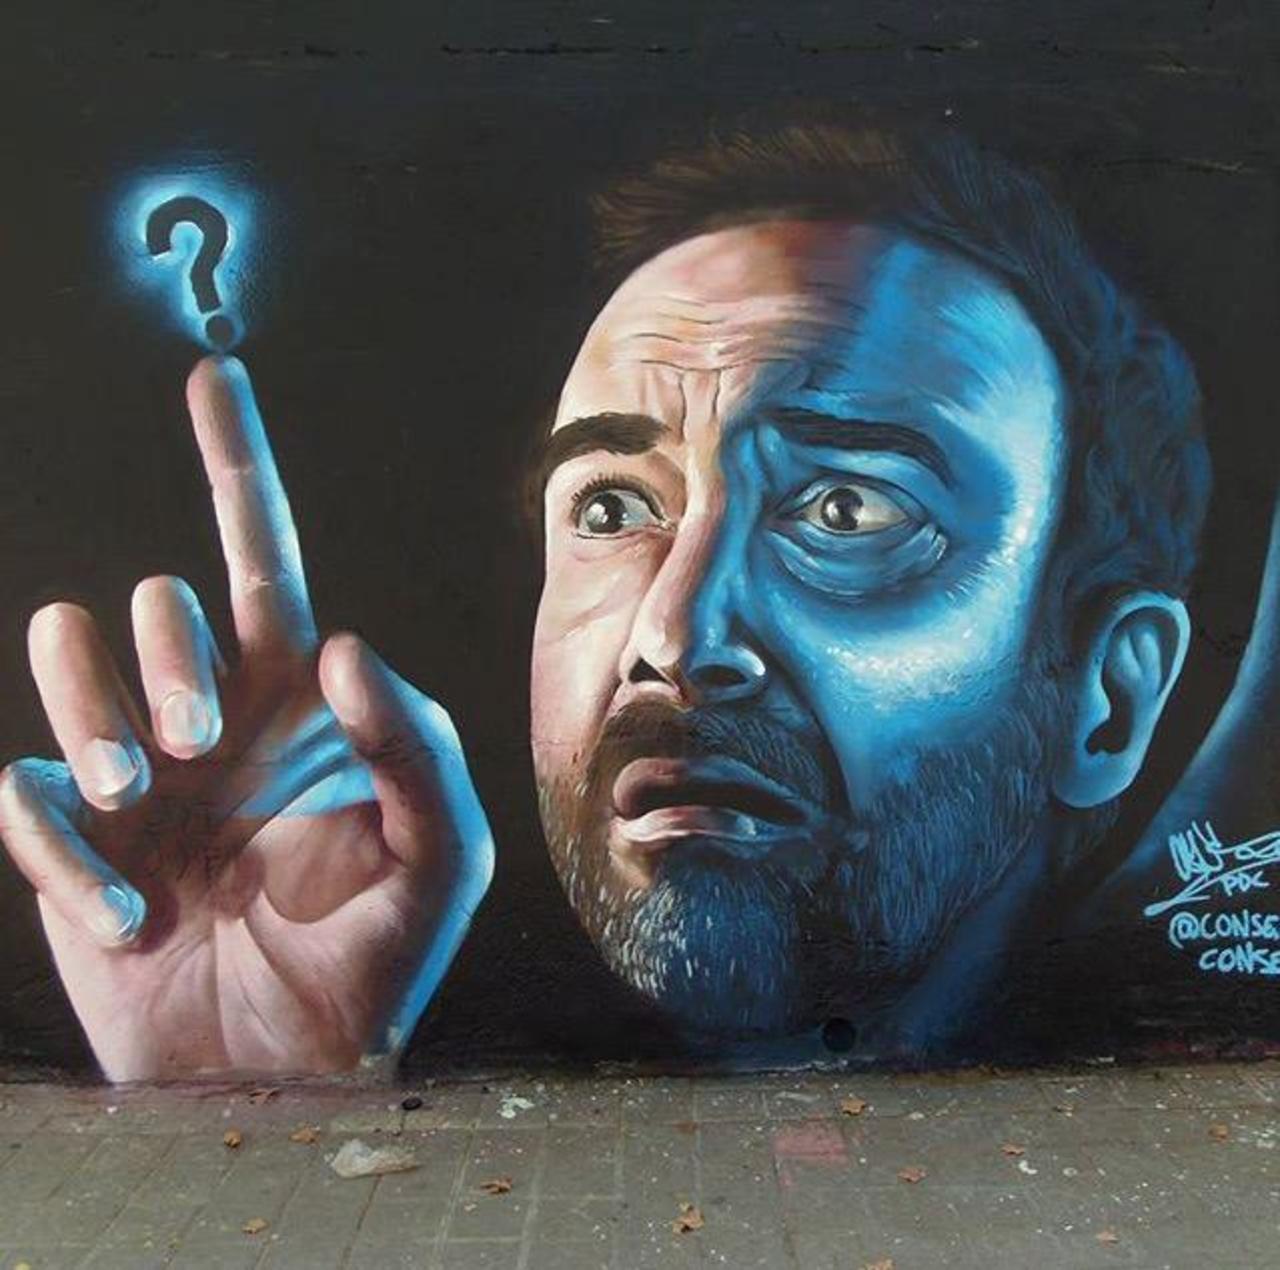 RT ArchaicManor "New Street Art by Conse

#art #graffiti #mural #streetart http://t.co/35CMSaUEcA yo"